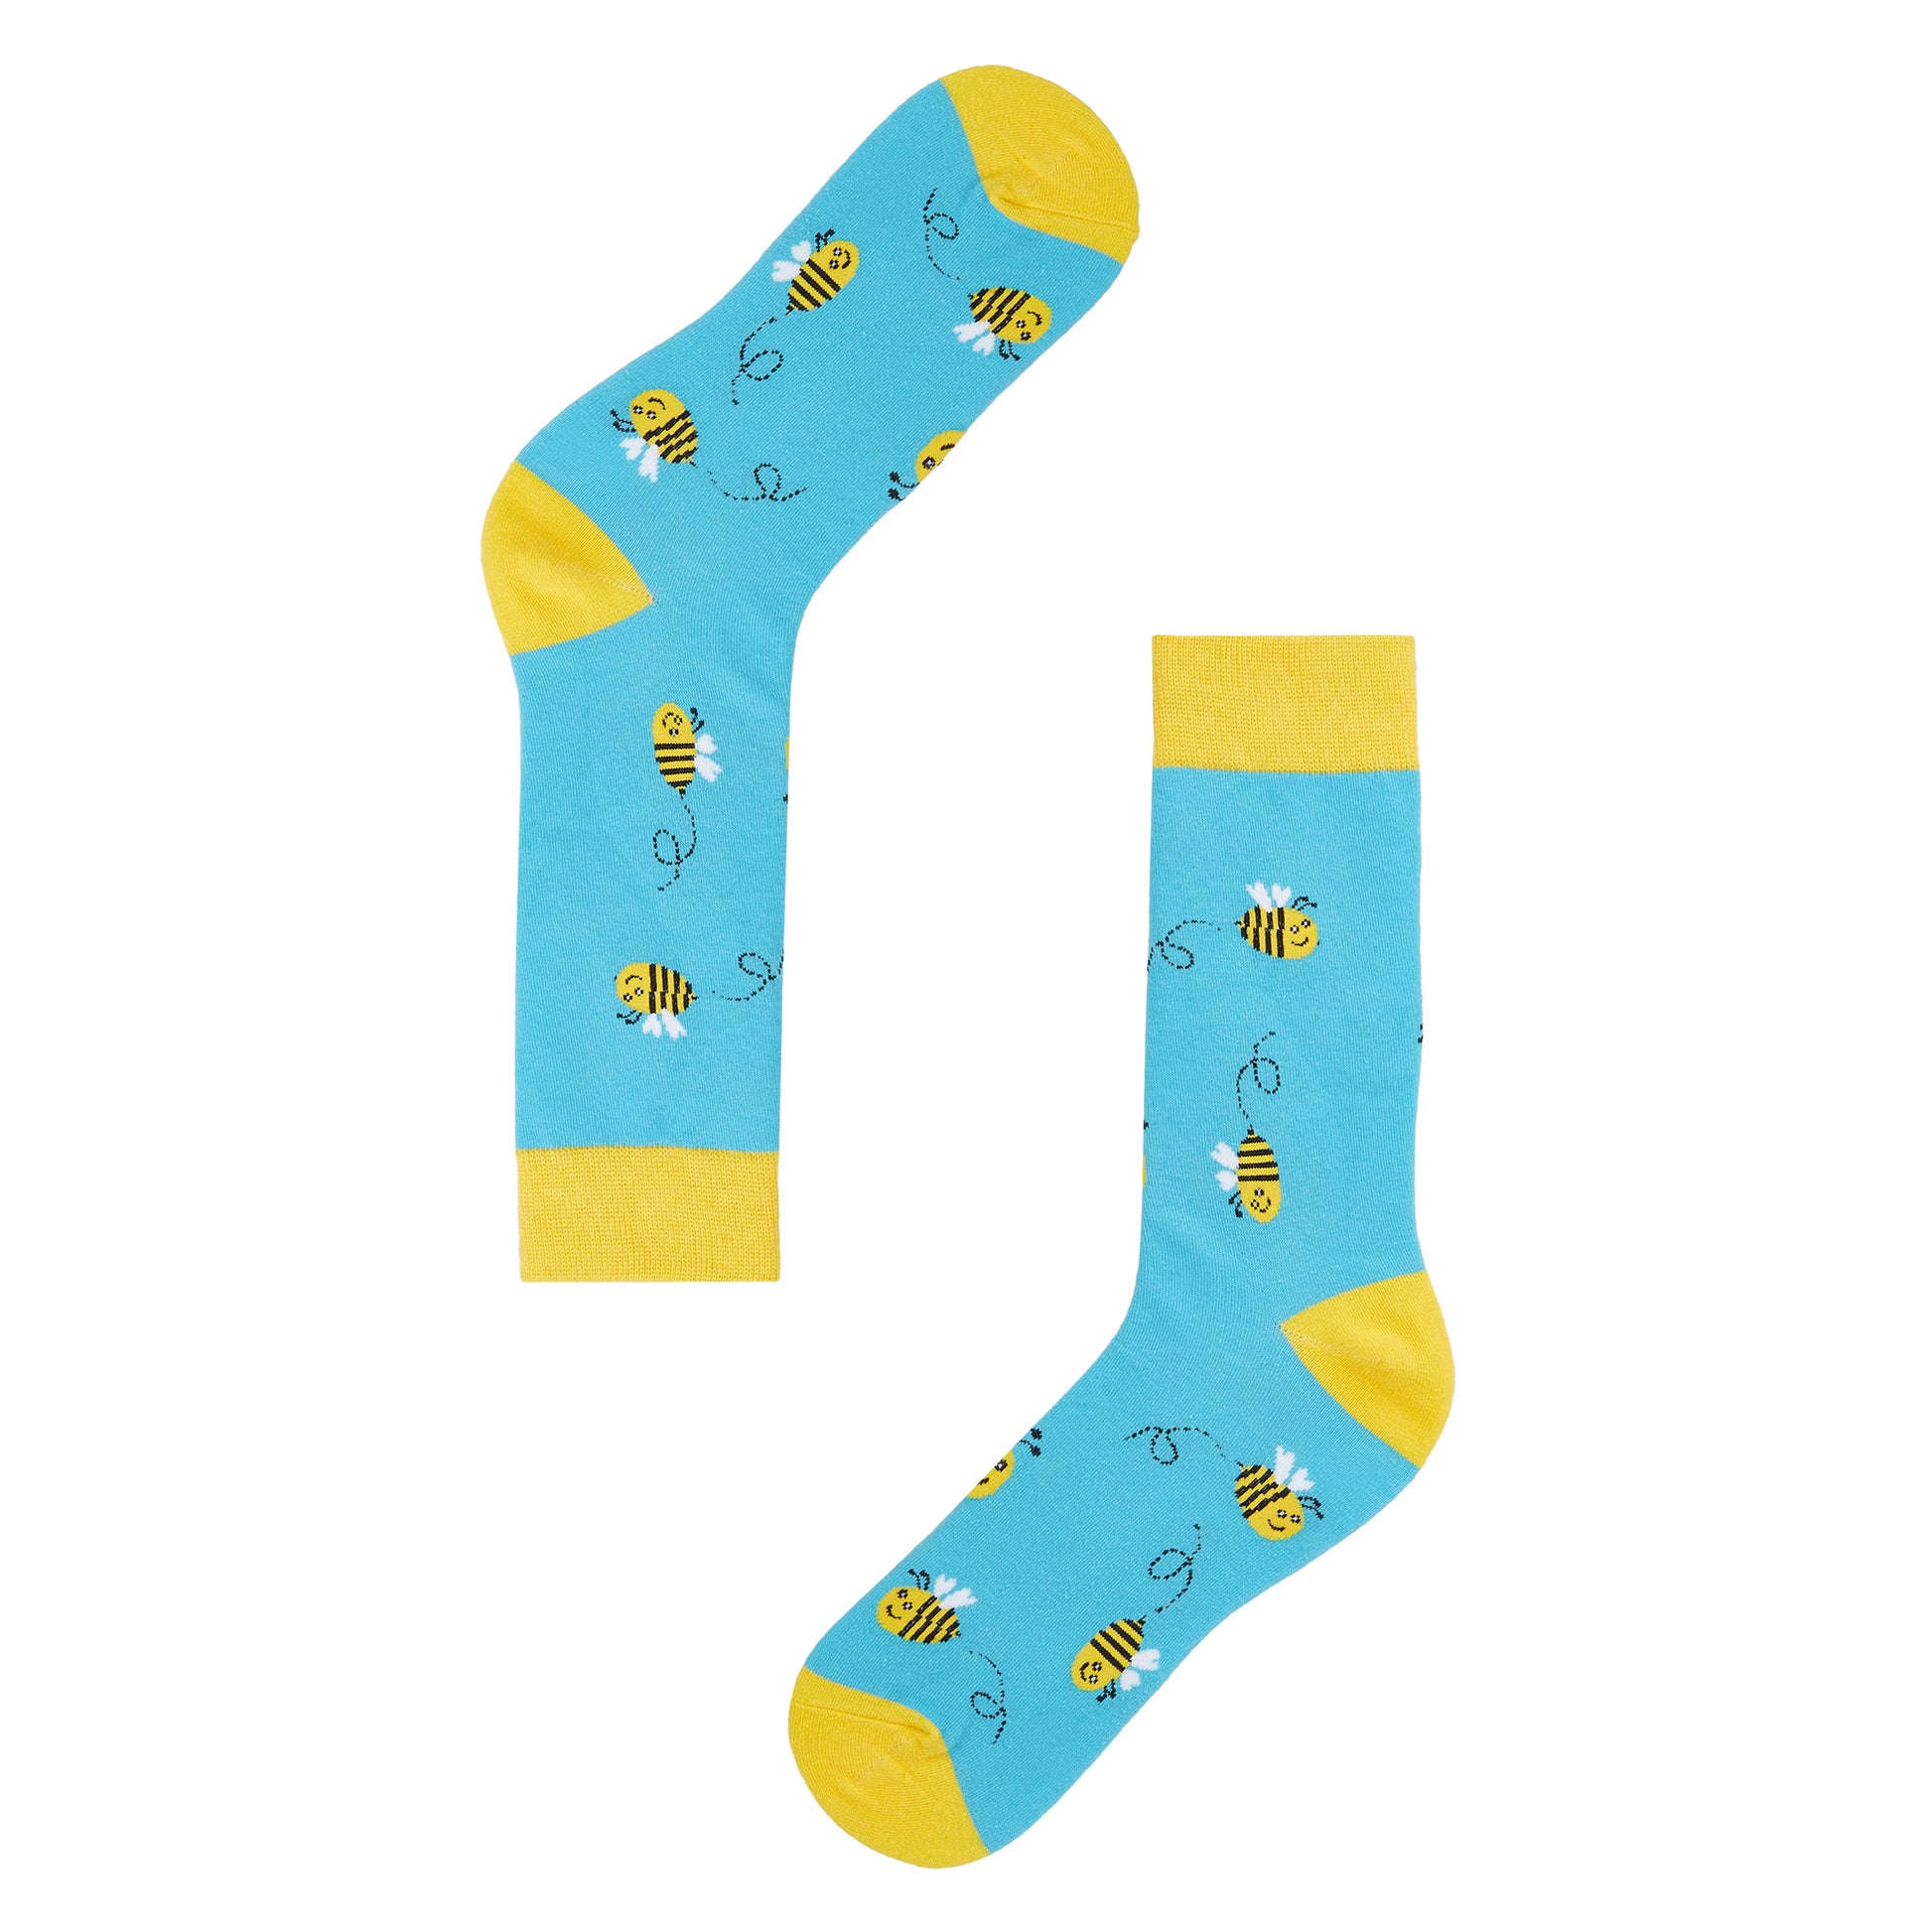 Busy Bee Printed Mid-Calf Length Socks - IDENTITY Apparel Shop